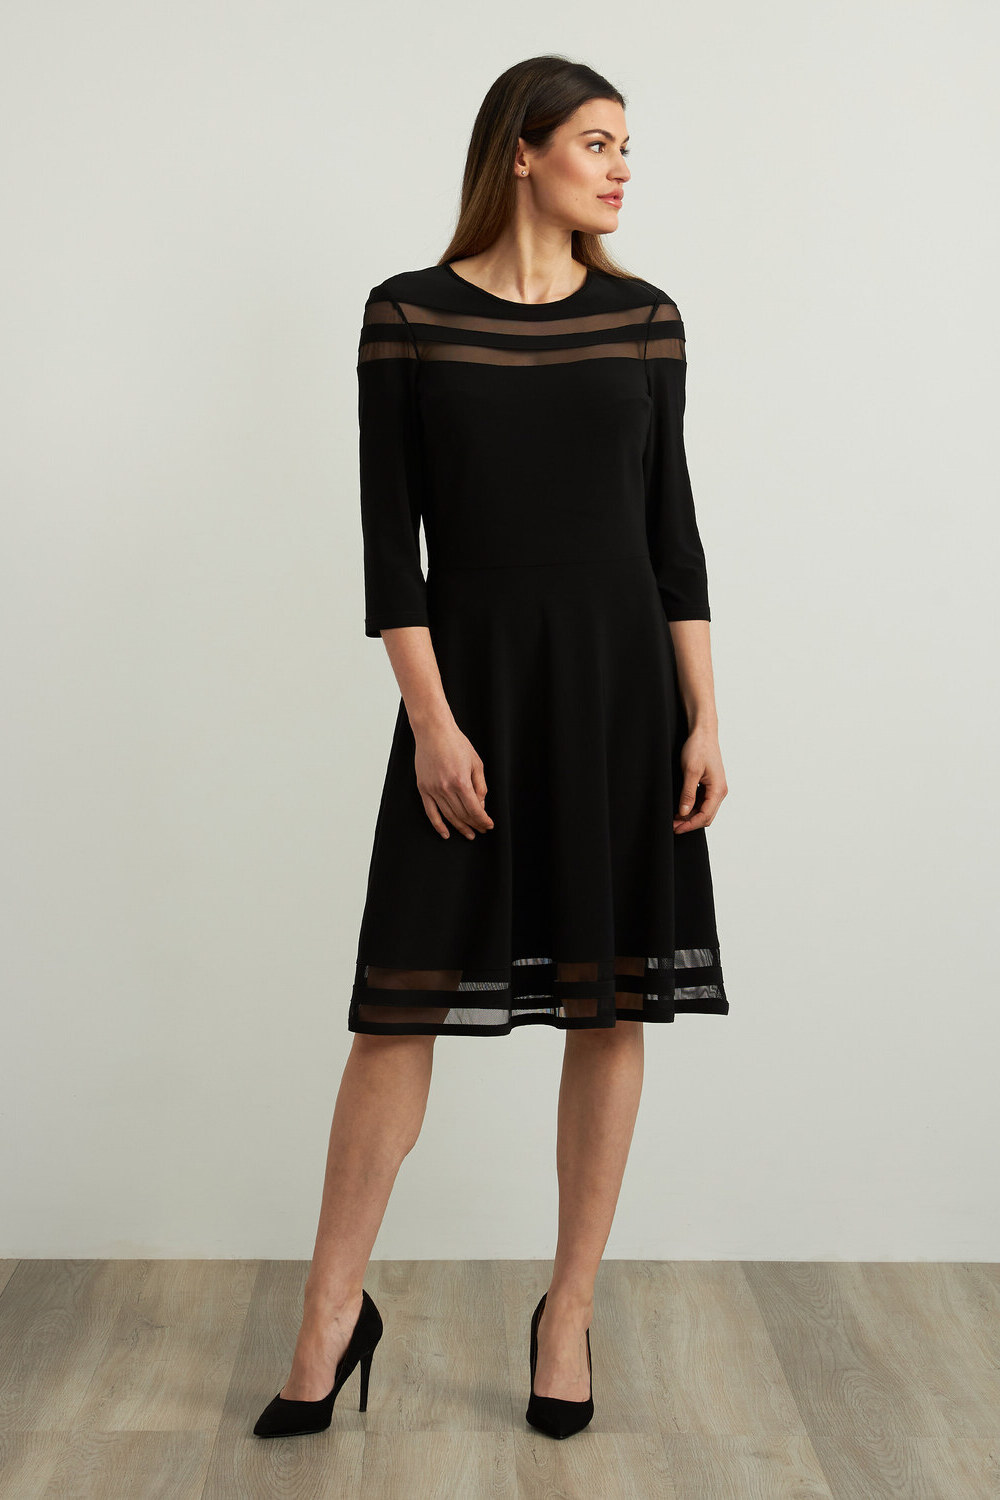 Joseph Ribkoff Mesh Insert Dress Style 213289. Black